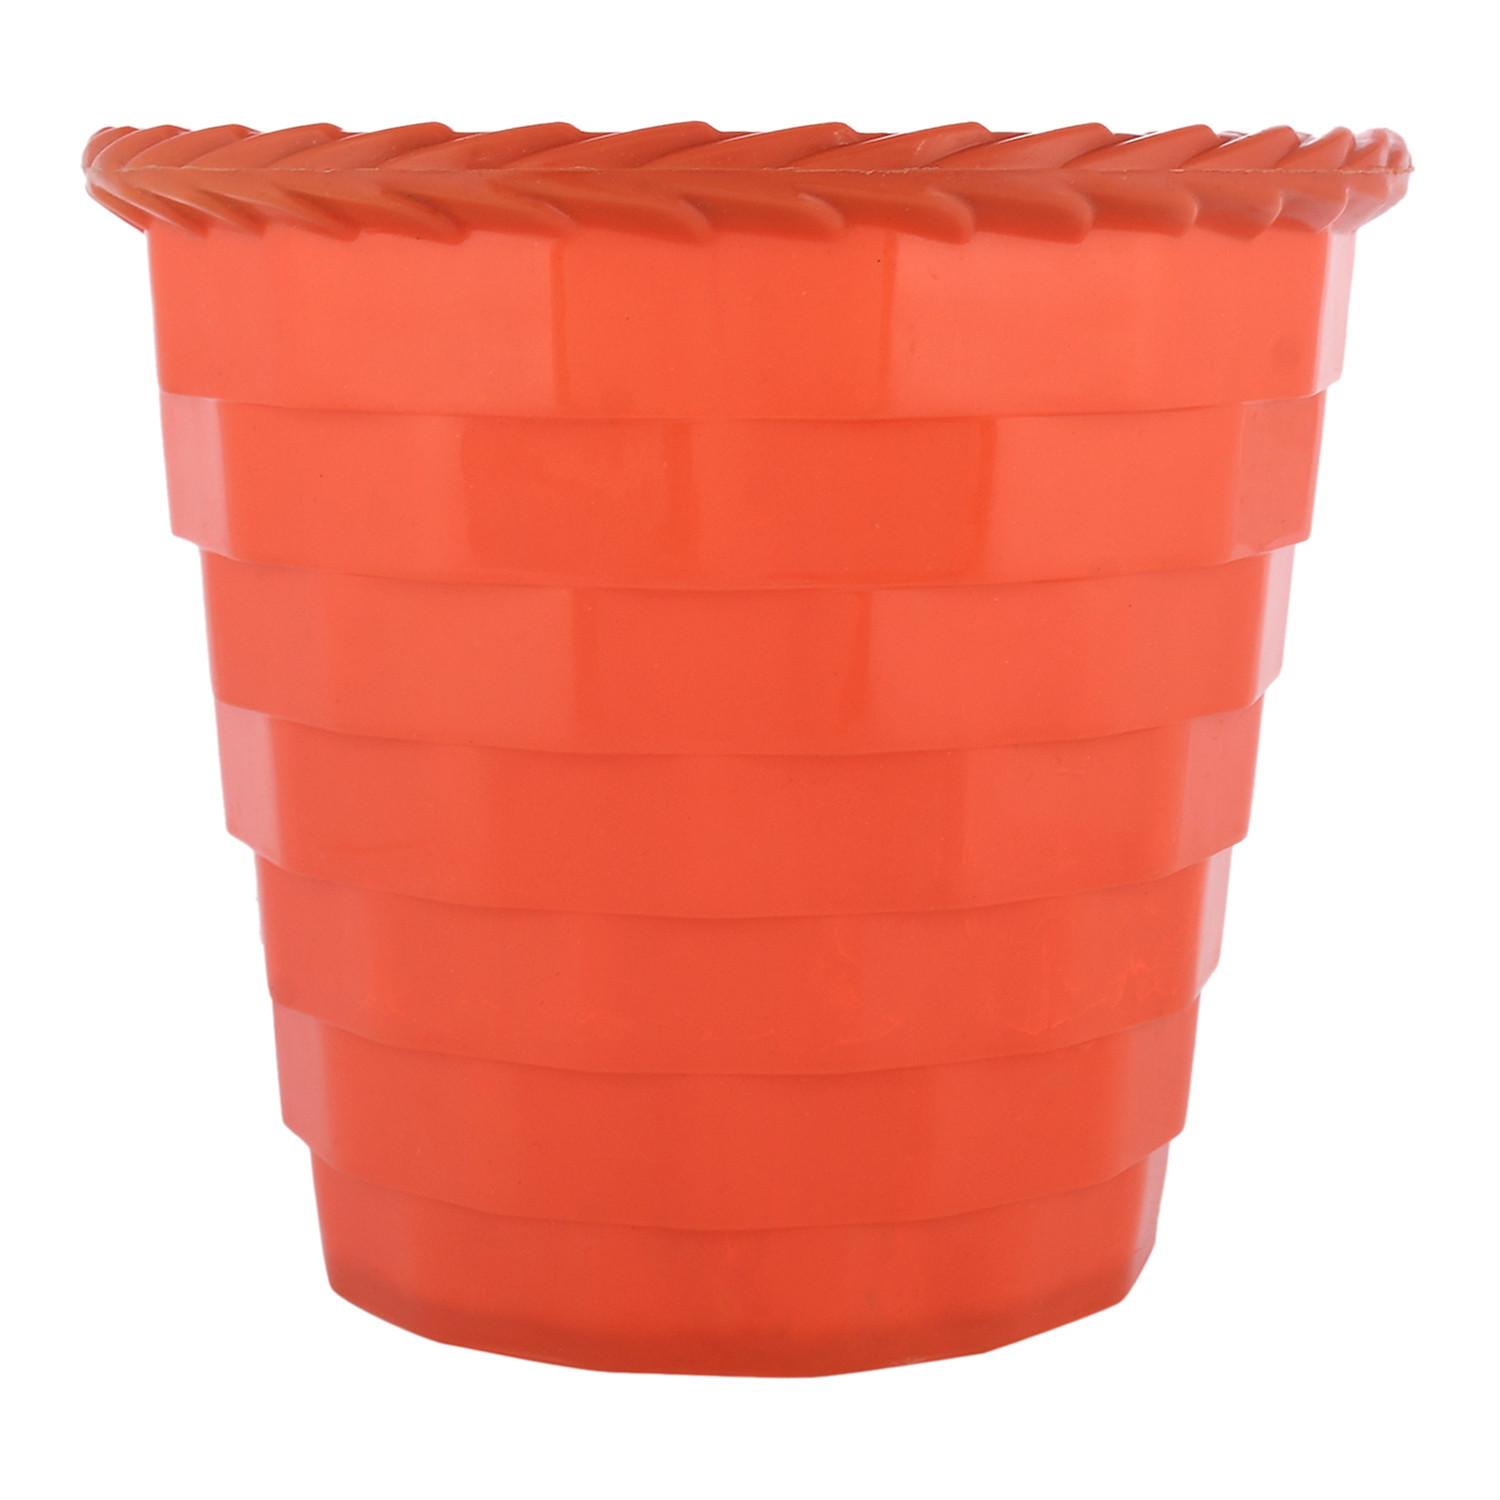 Kuber Industries Brick Flower Pot|Durable Plastic Flower Pots|Planters for Home Décor|Garden|Living Room|Balcony|6 Inch|Pack of 2 (Orange & Grey)